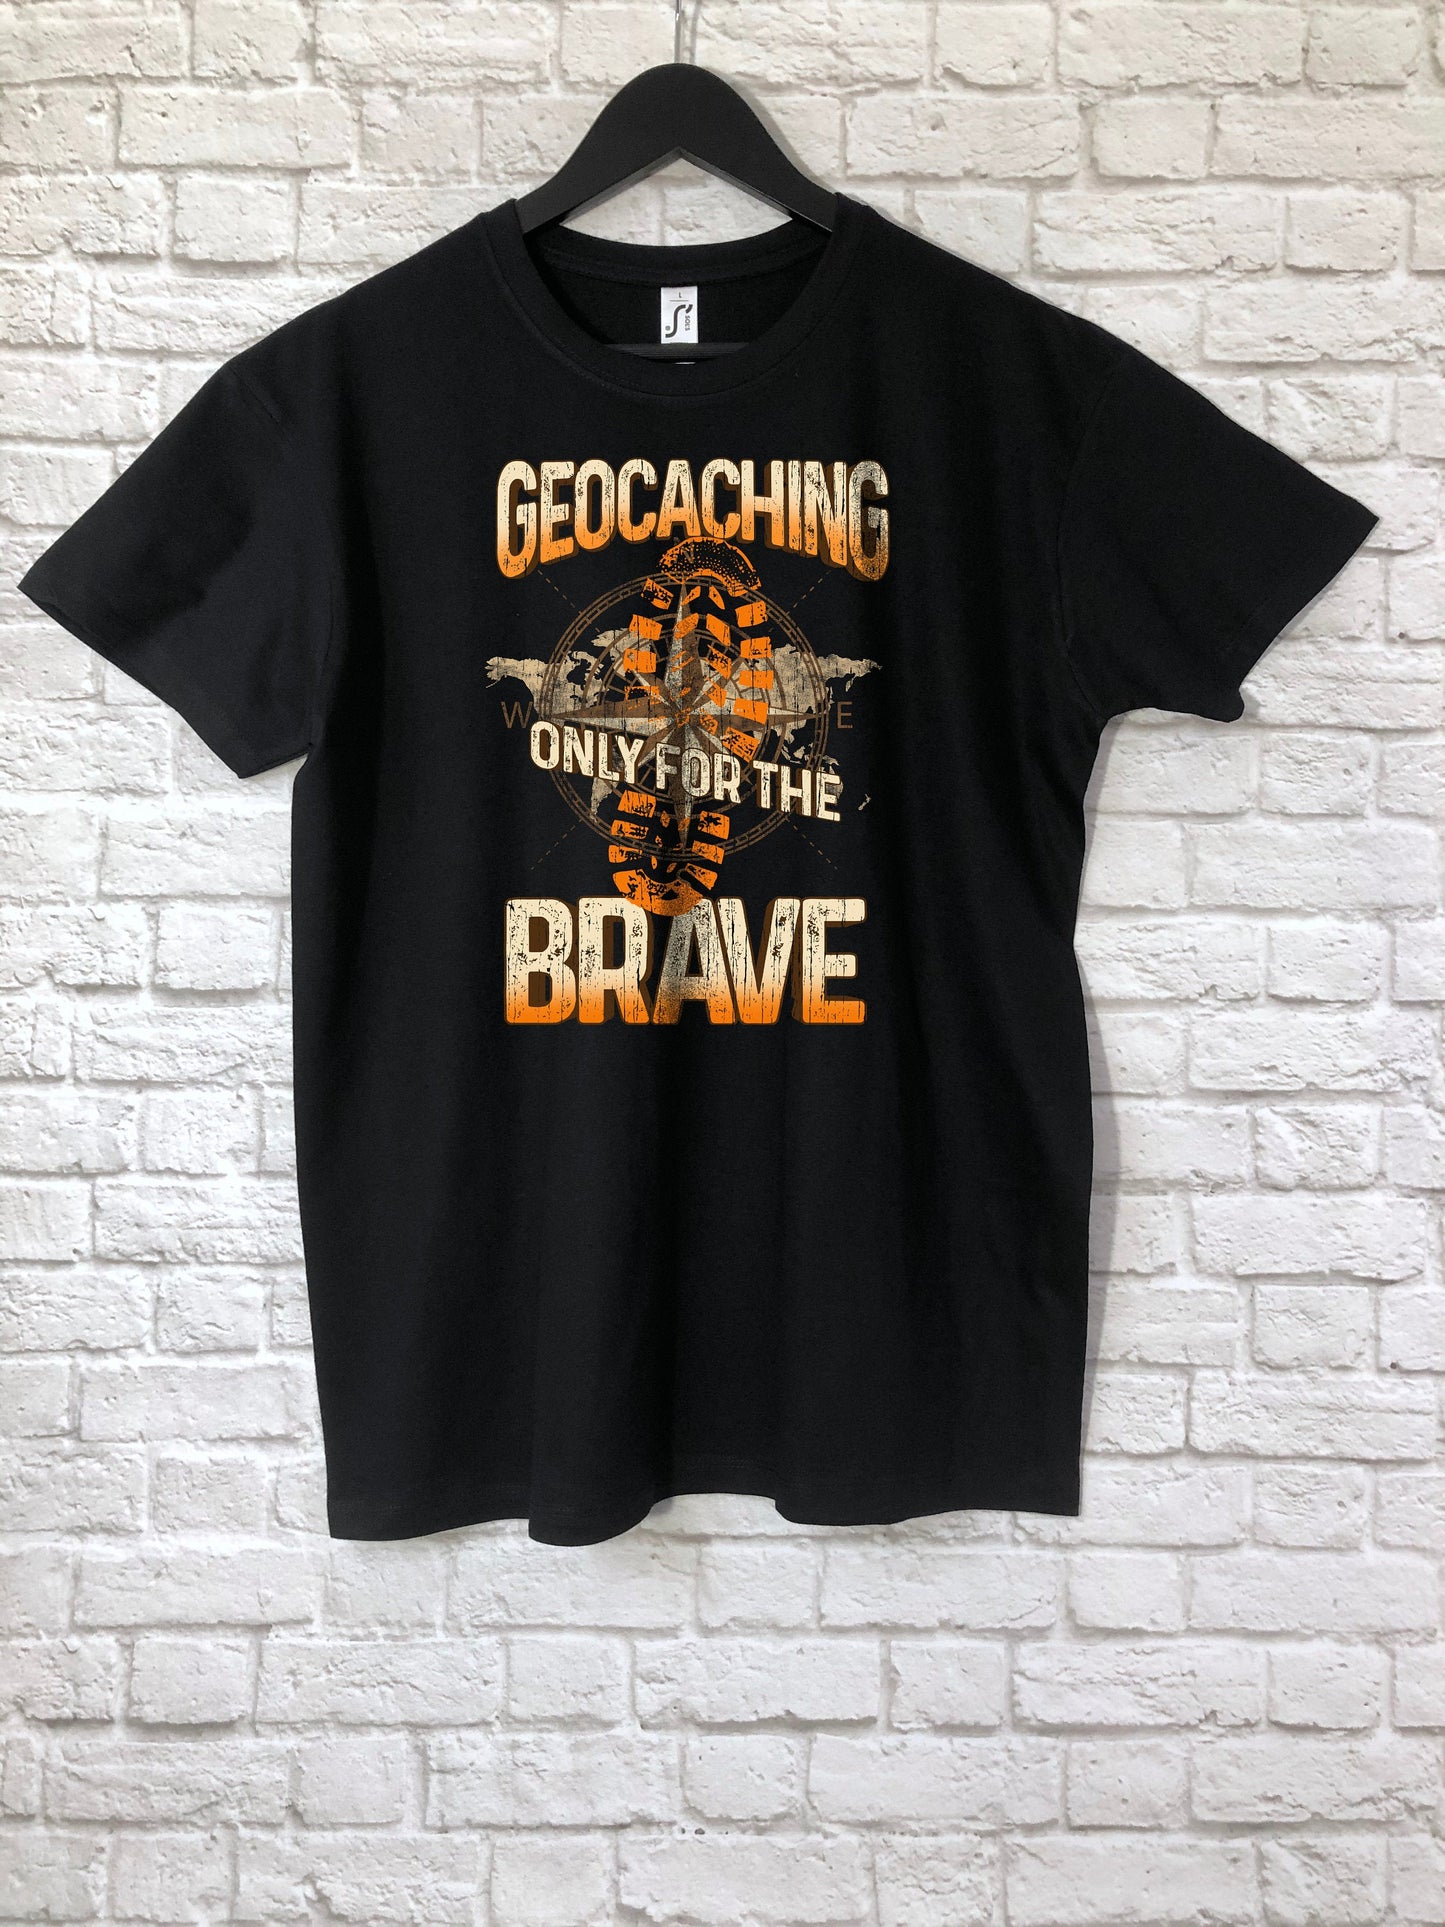 Geocaching T-Shirt, Geocacher Adventure Gift Idea, Humorous Geocache Tee Shirt Top Present